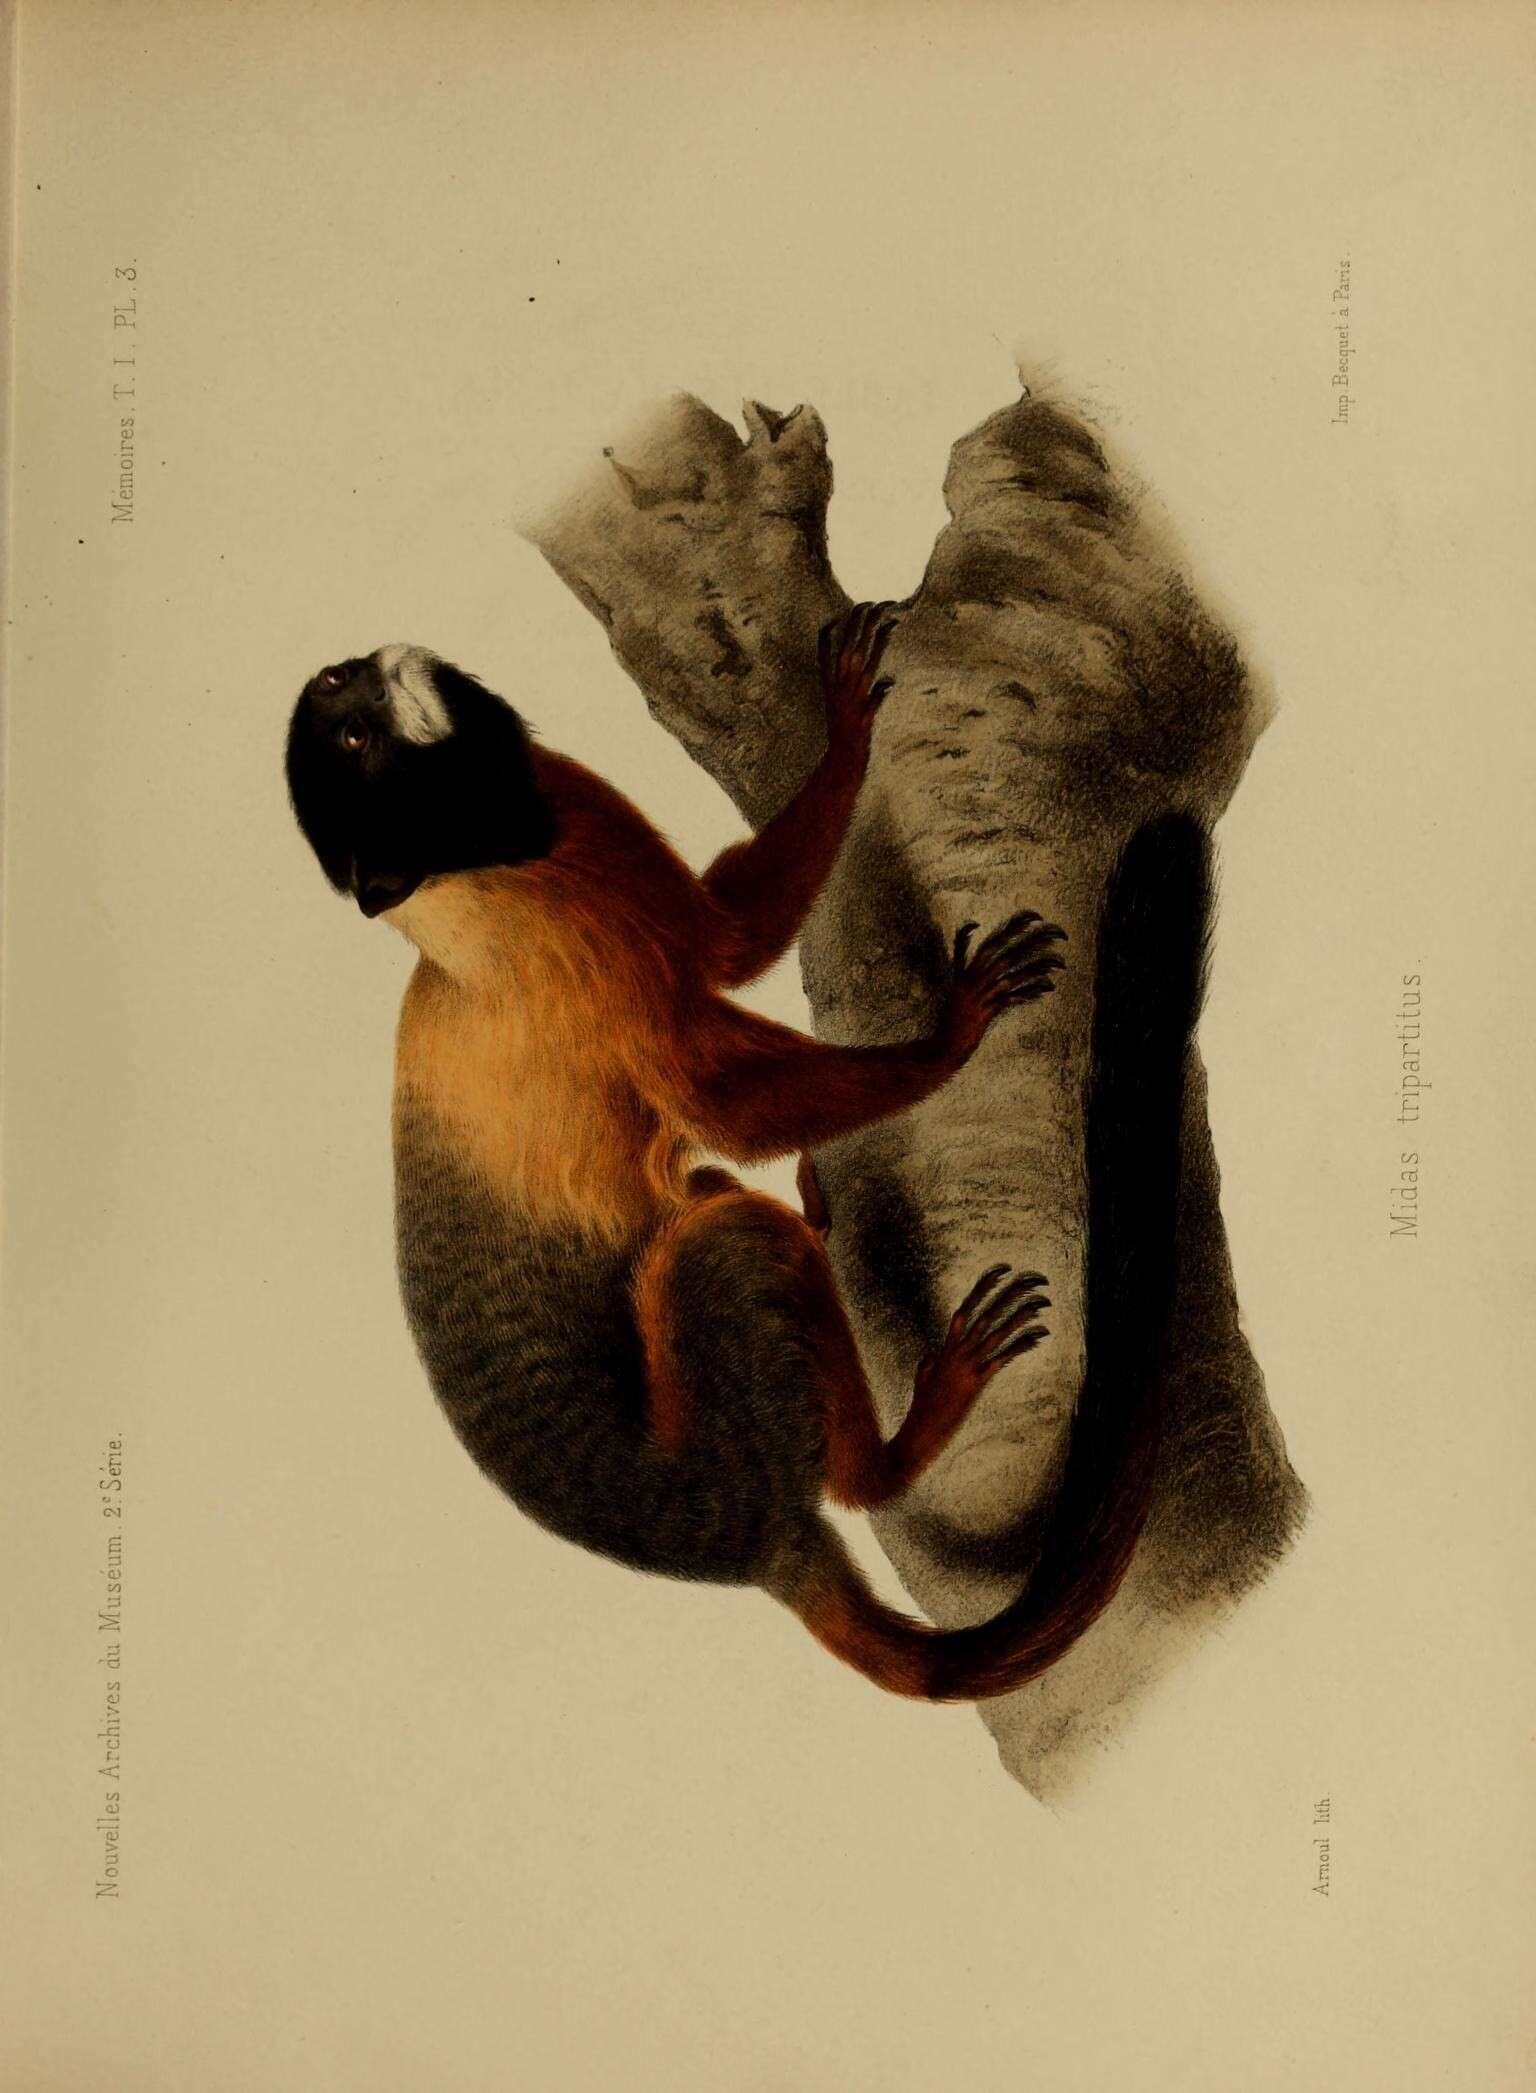 Sivun Leontocebus Wagner 1840 kuva